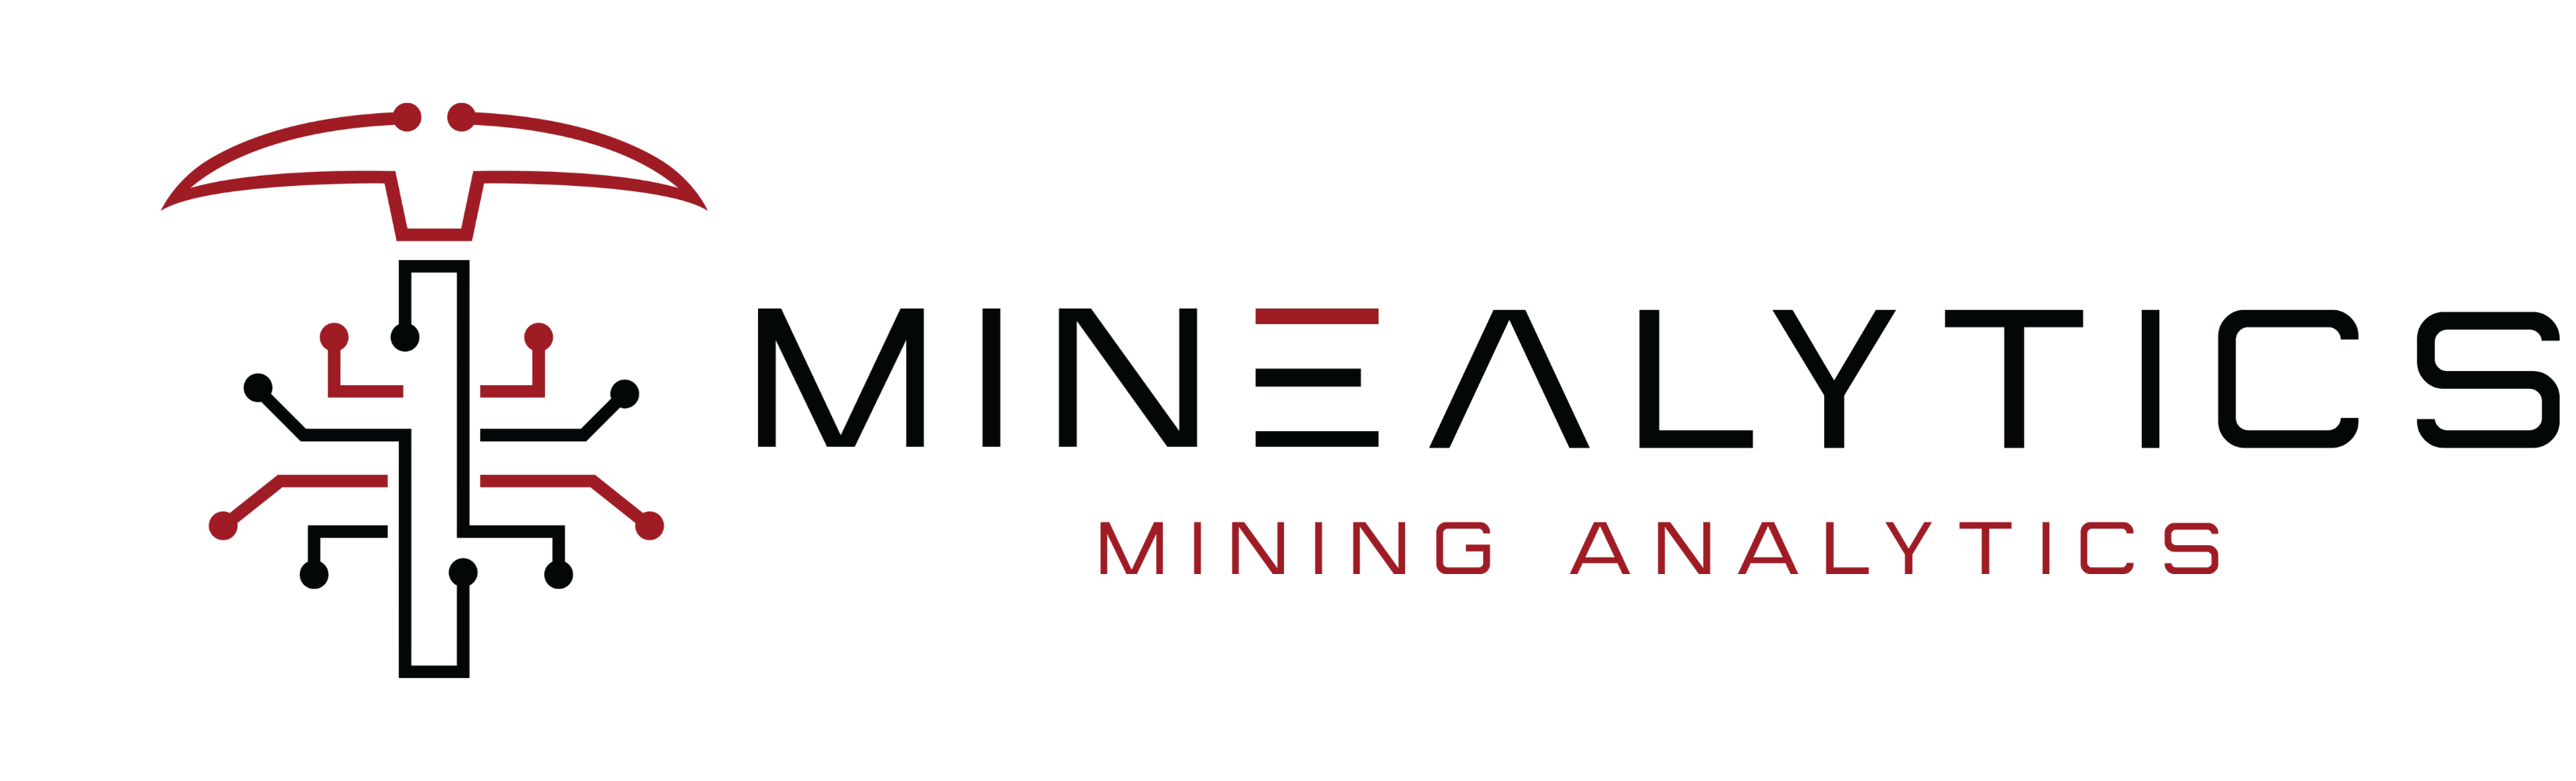 MineAlytics logo